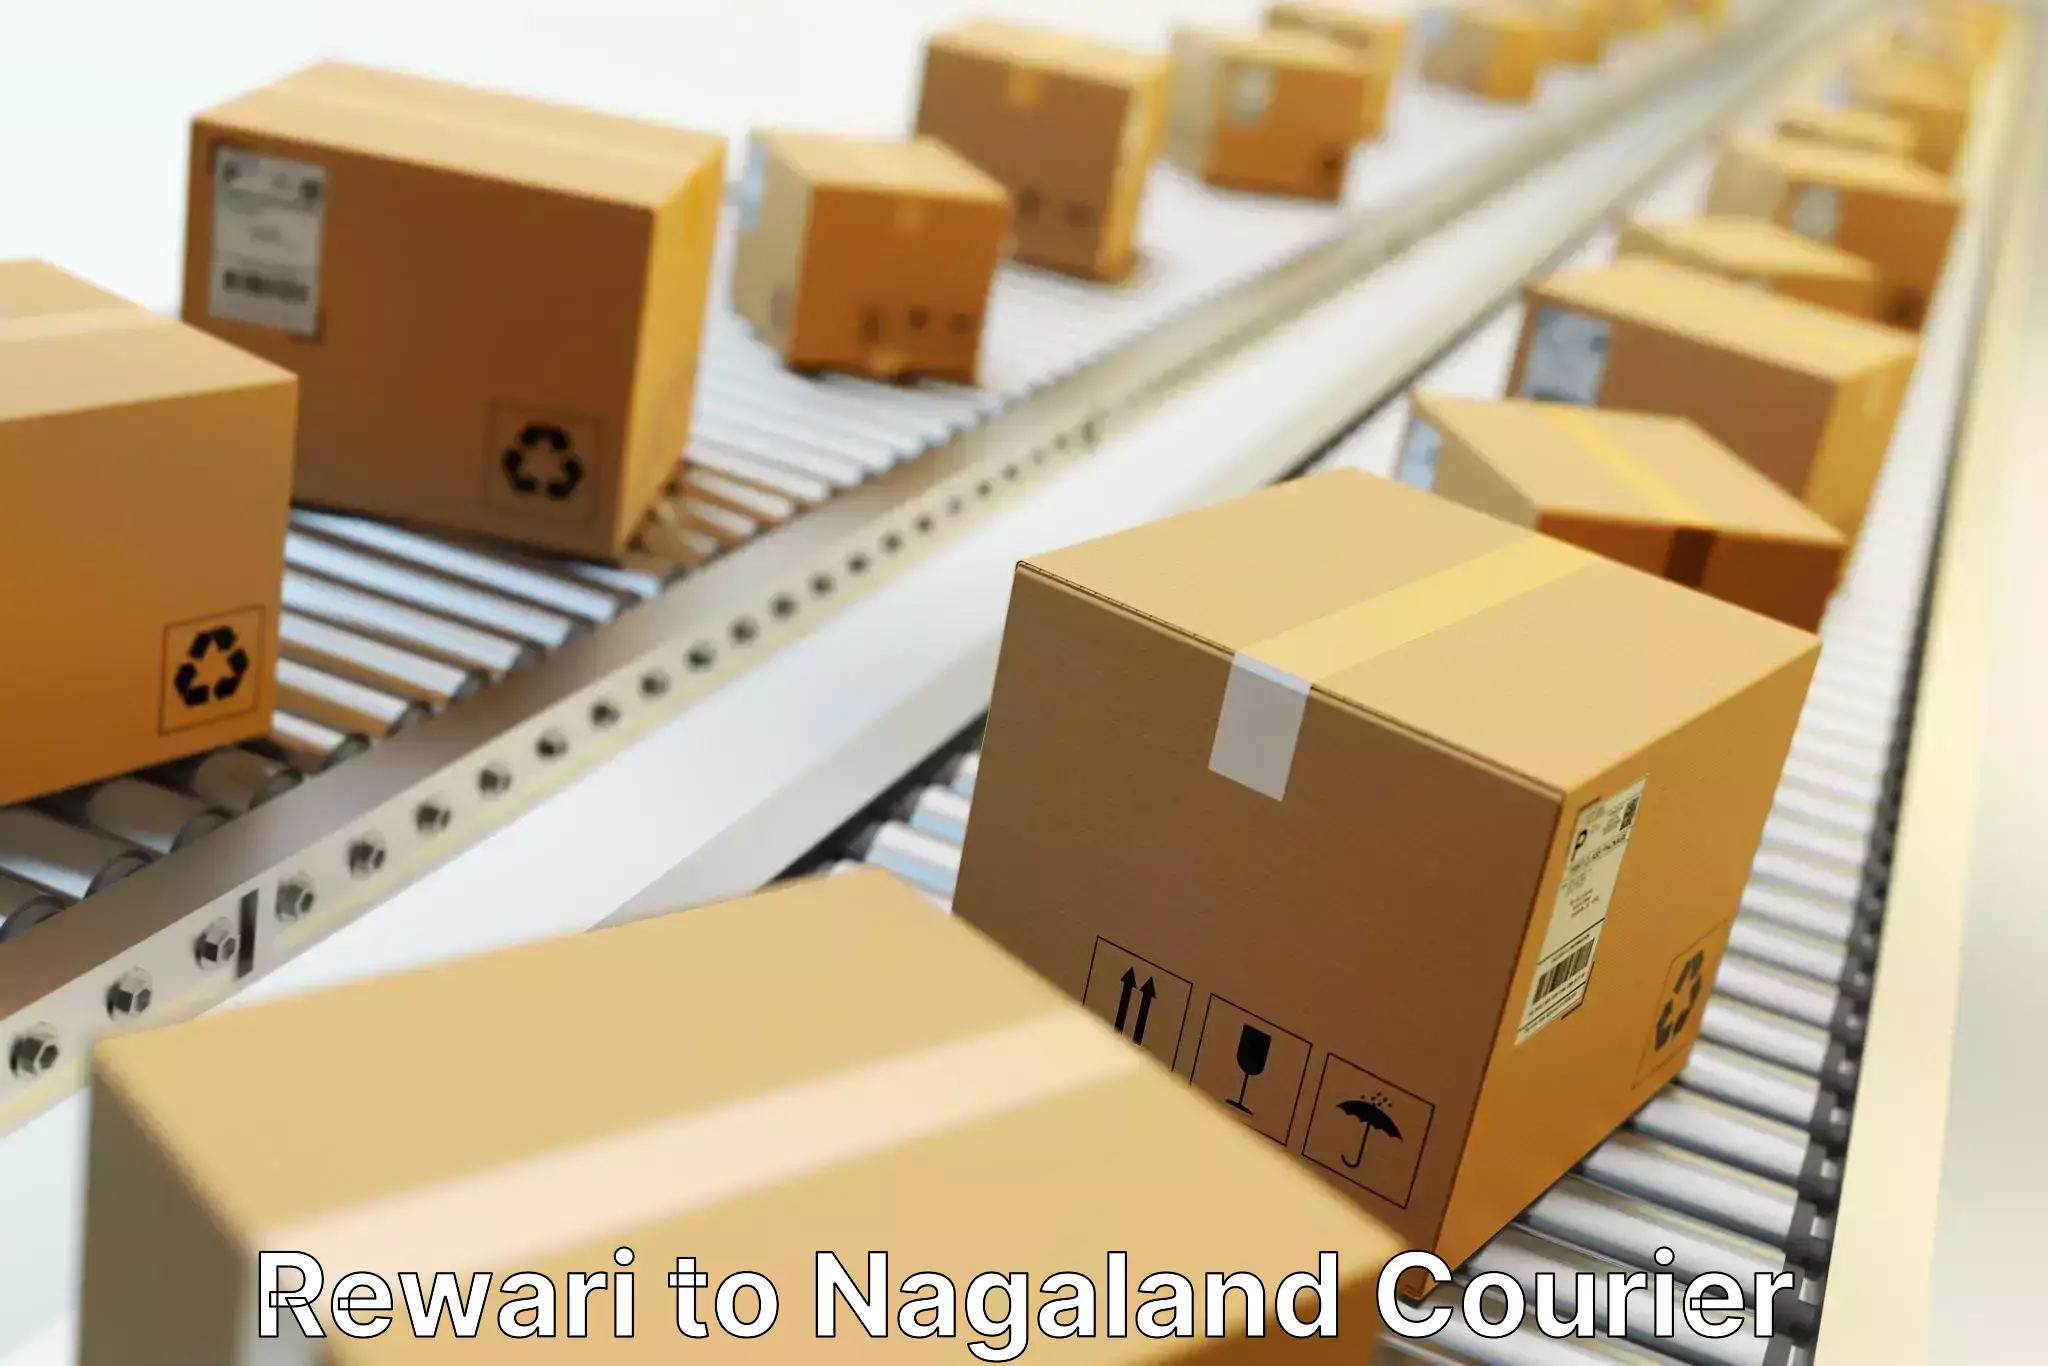 Courier service innovation Rewari to Nagaland